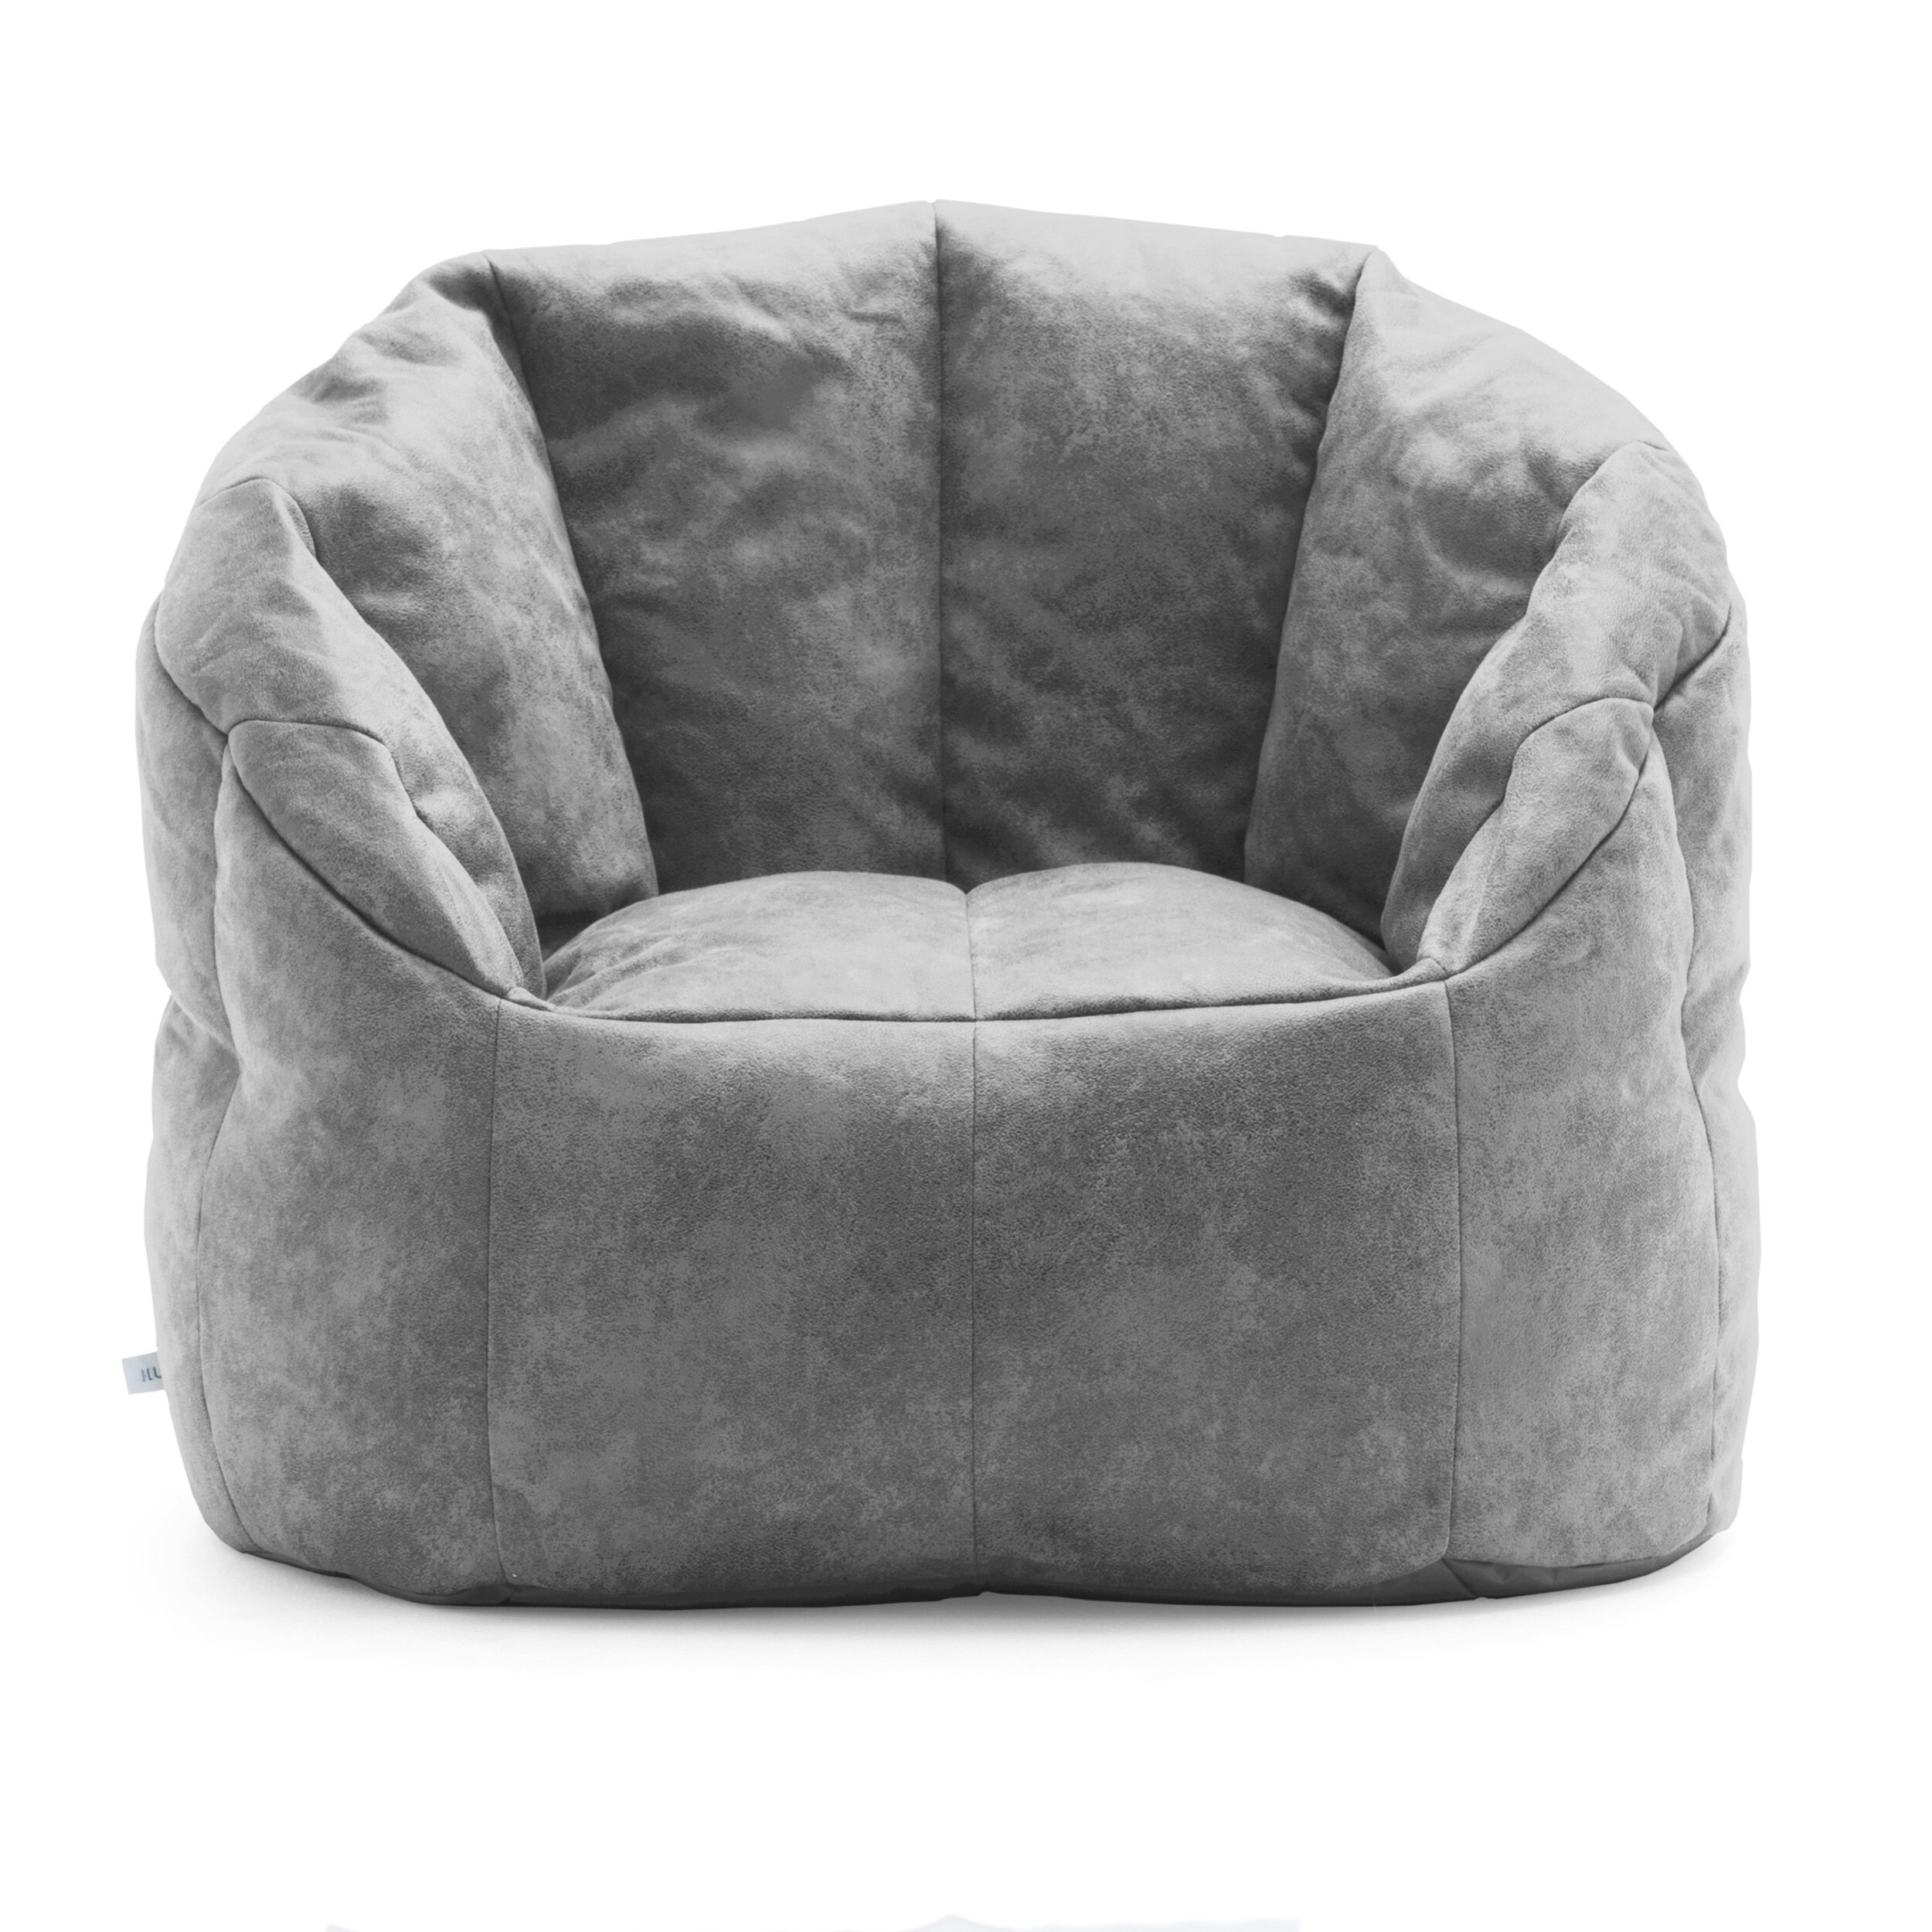 Comfort Research Big Joe Lux Standard Bean Bag Chair Reviews Wayfair